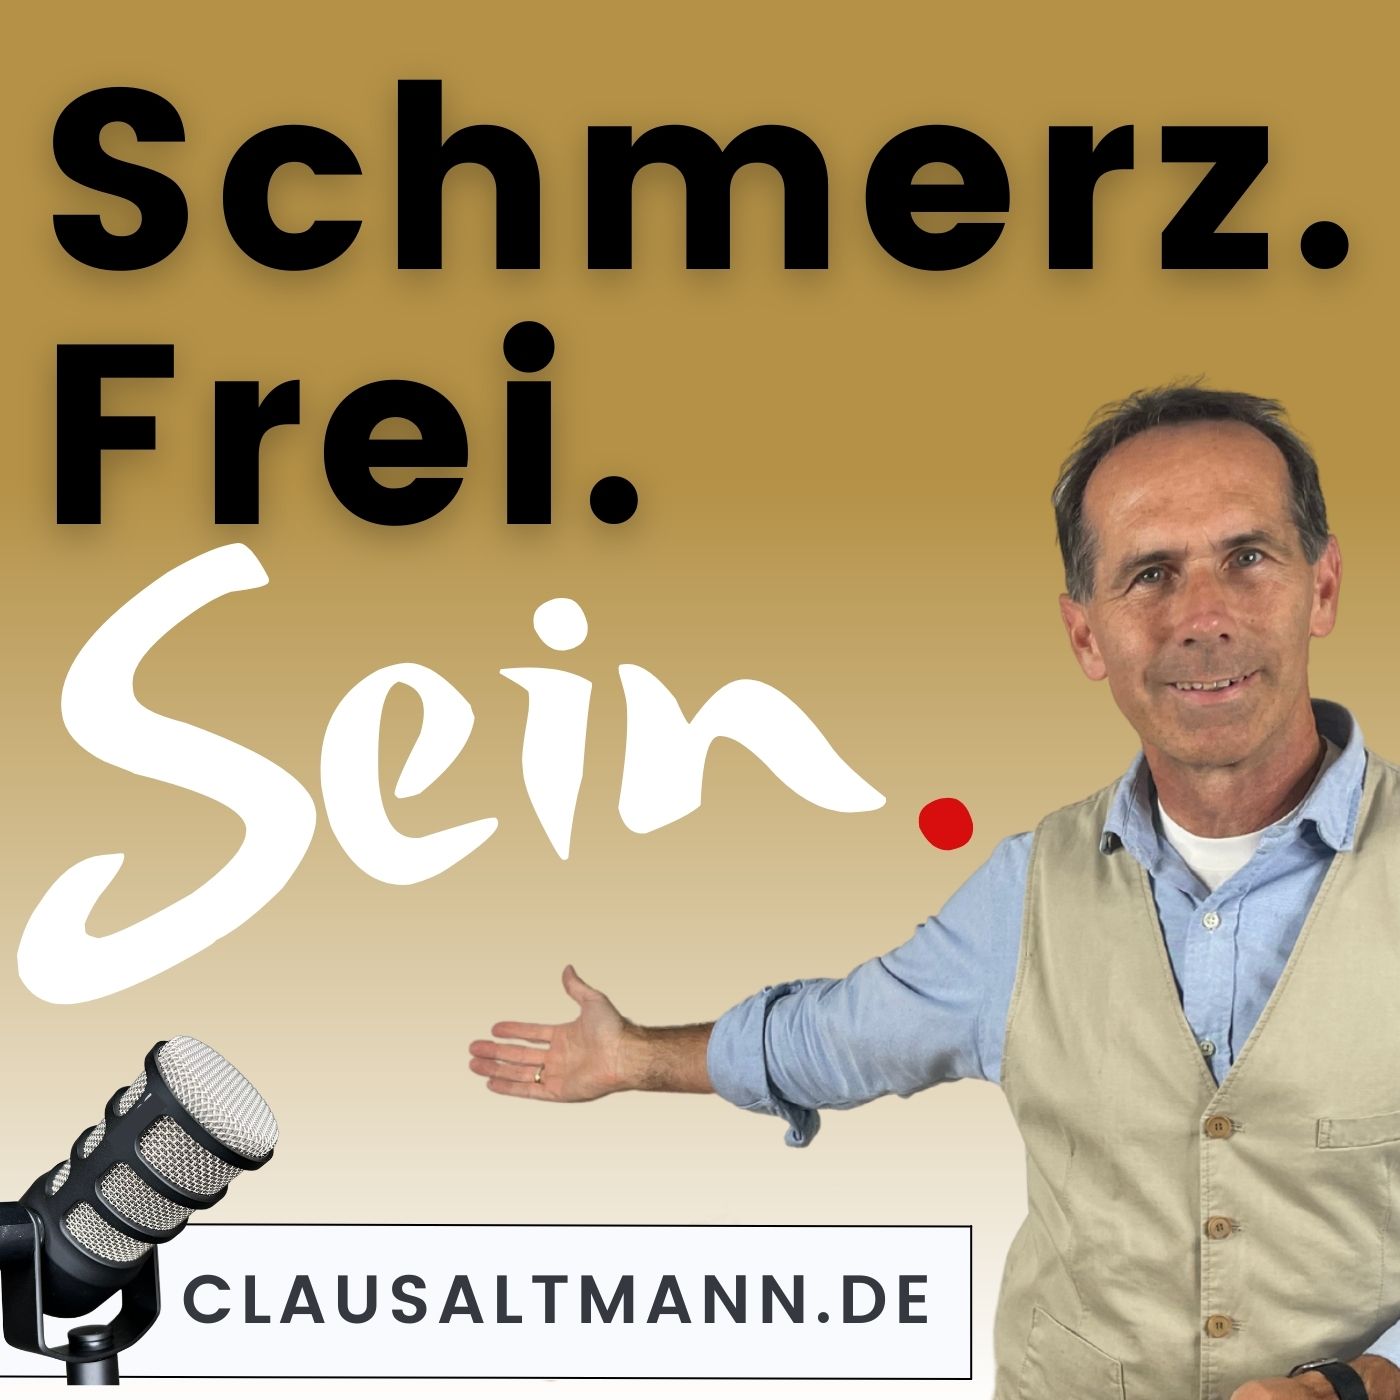 Clausaltmann.de Podcast. Schmerzfre. Sein.